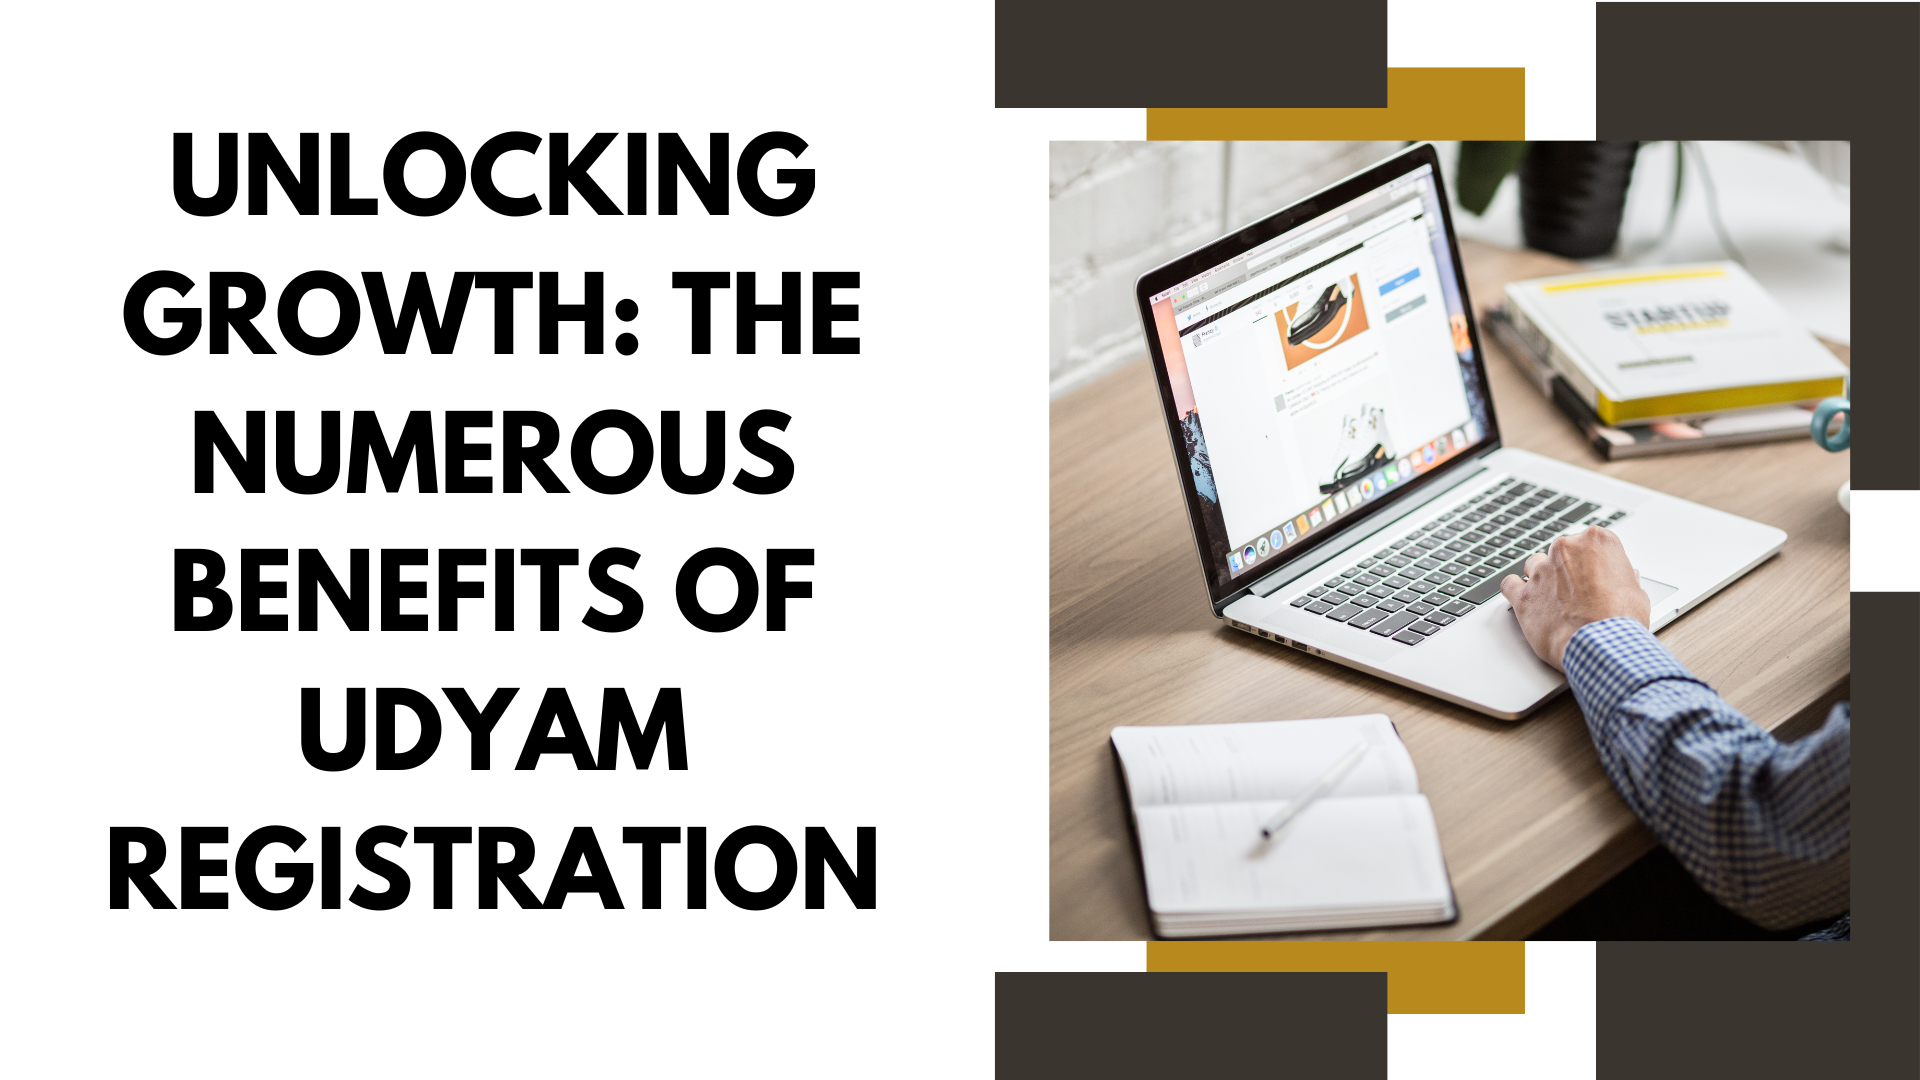 Unlocking Growth The Numerous Benefits of Udyam Registration